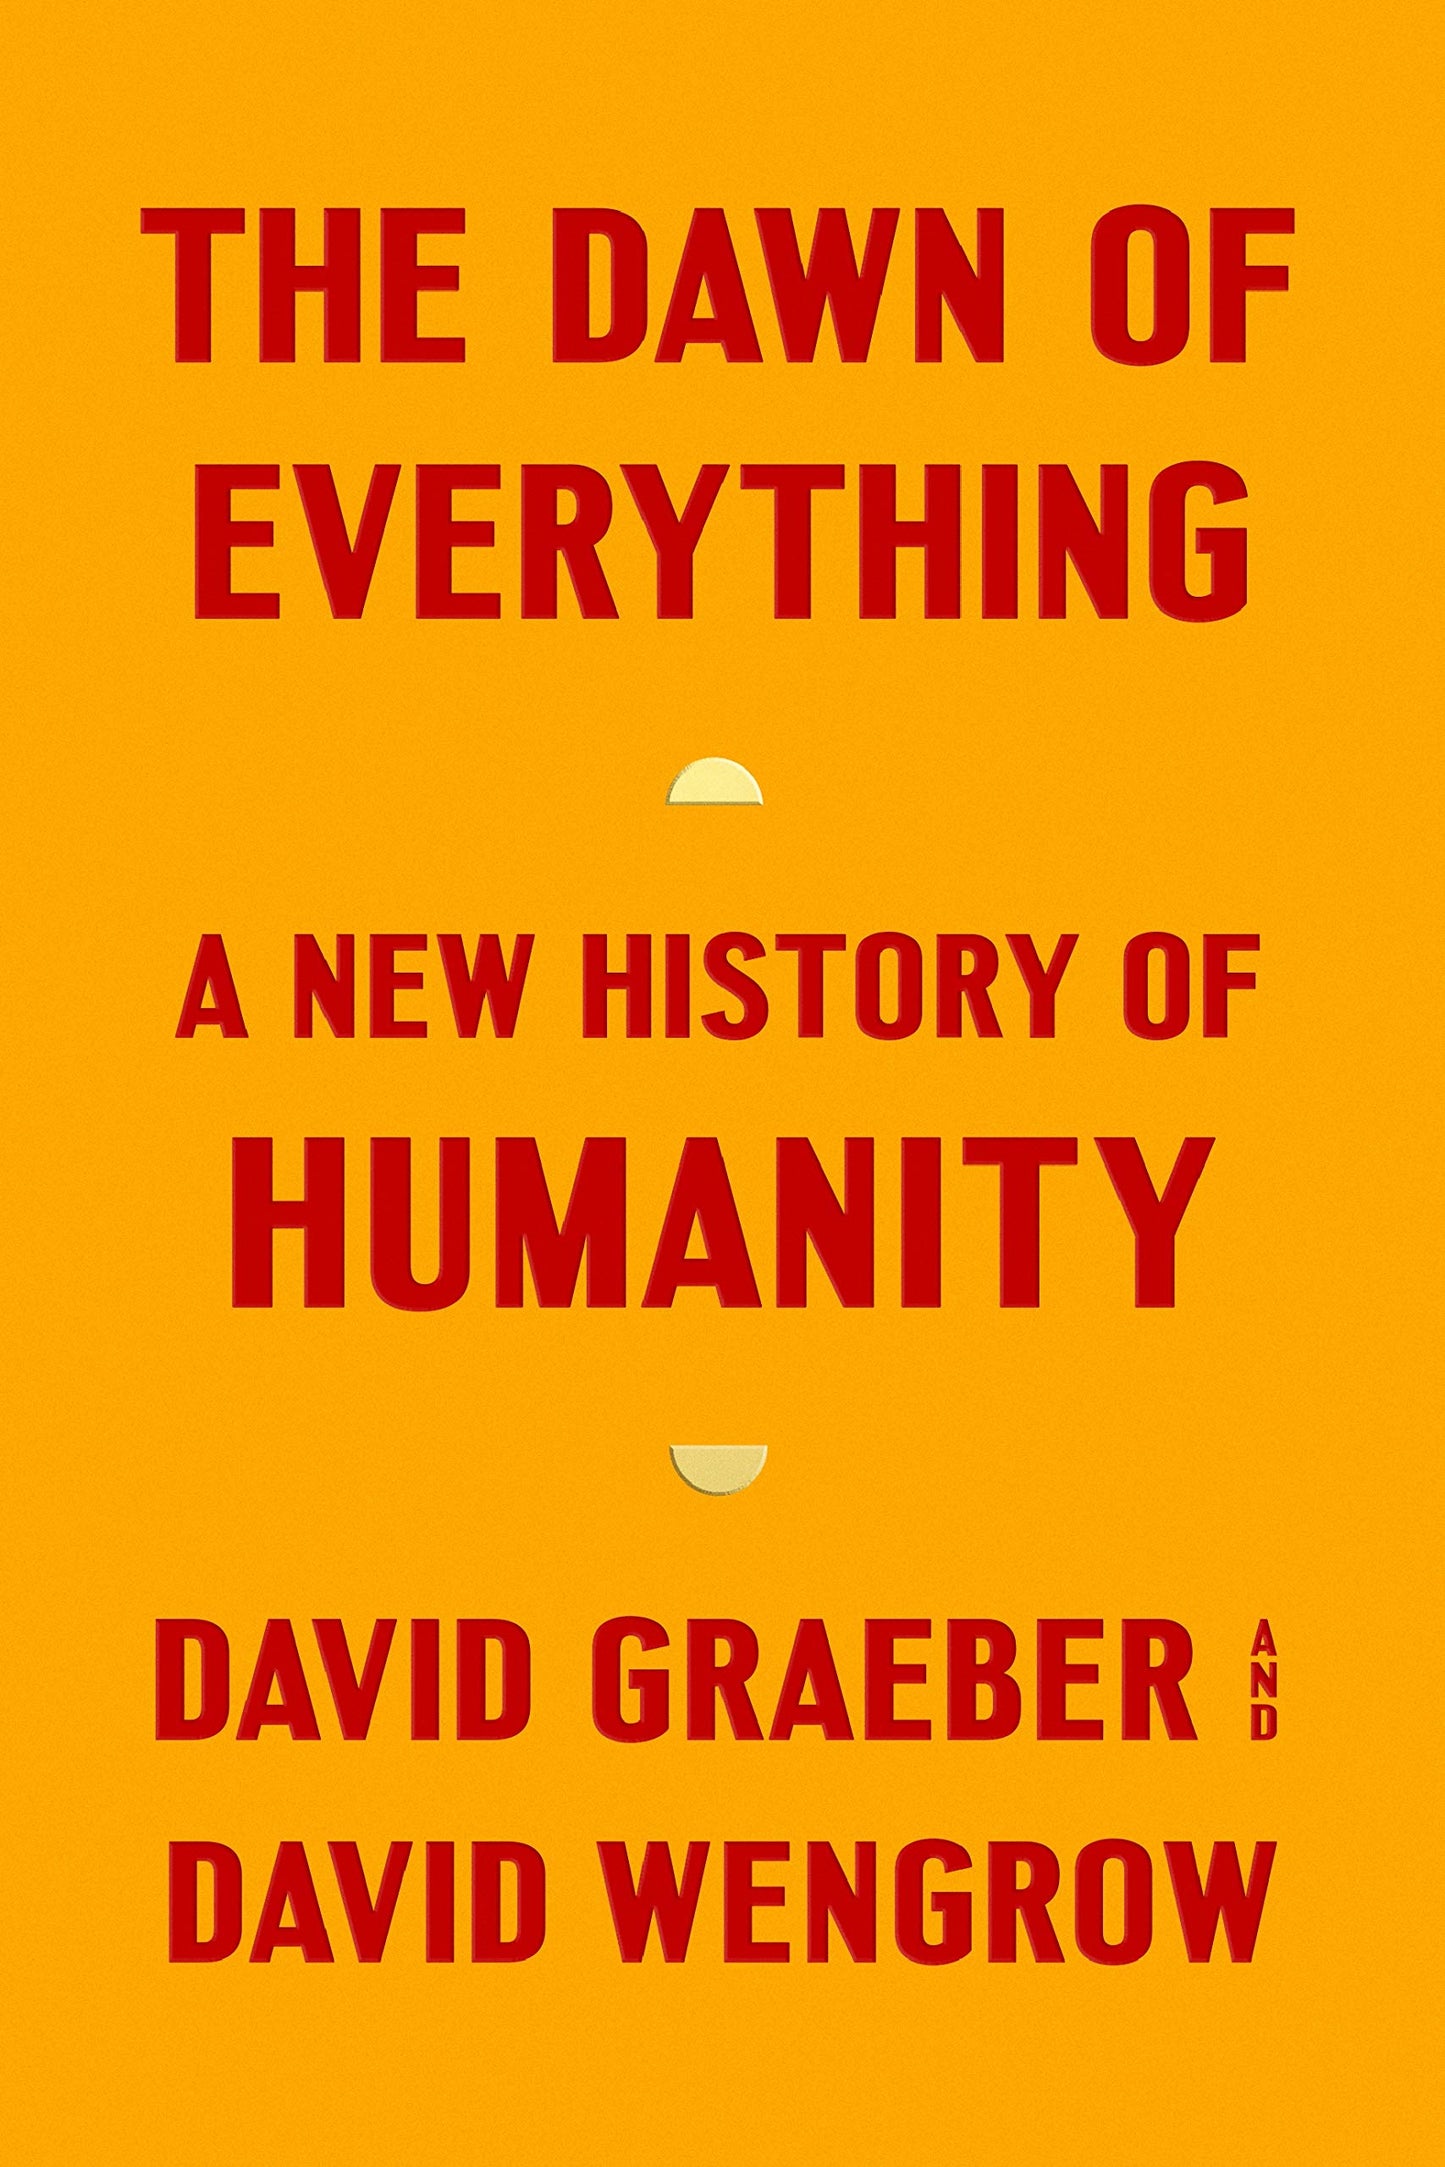 The Dawn of Everything, by David Graeber & David Wengrow